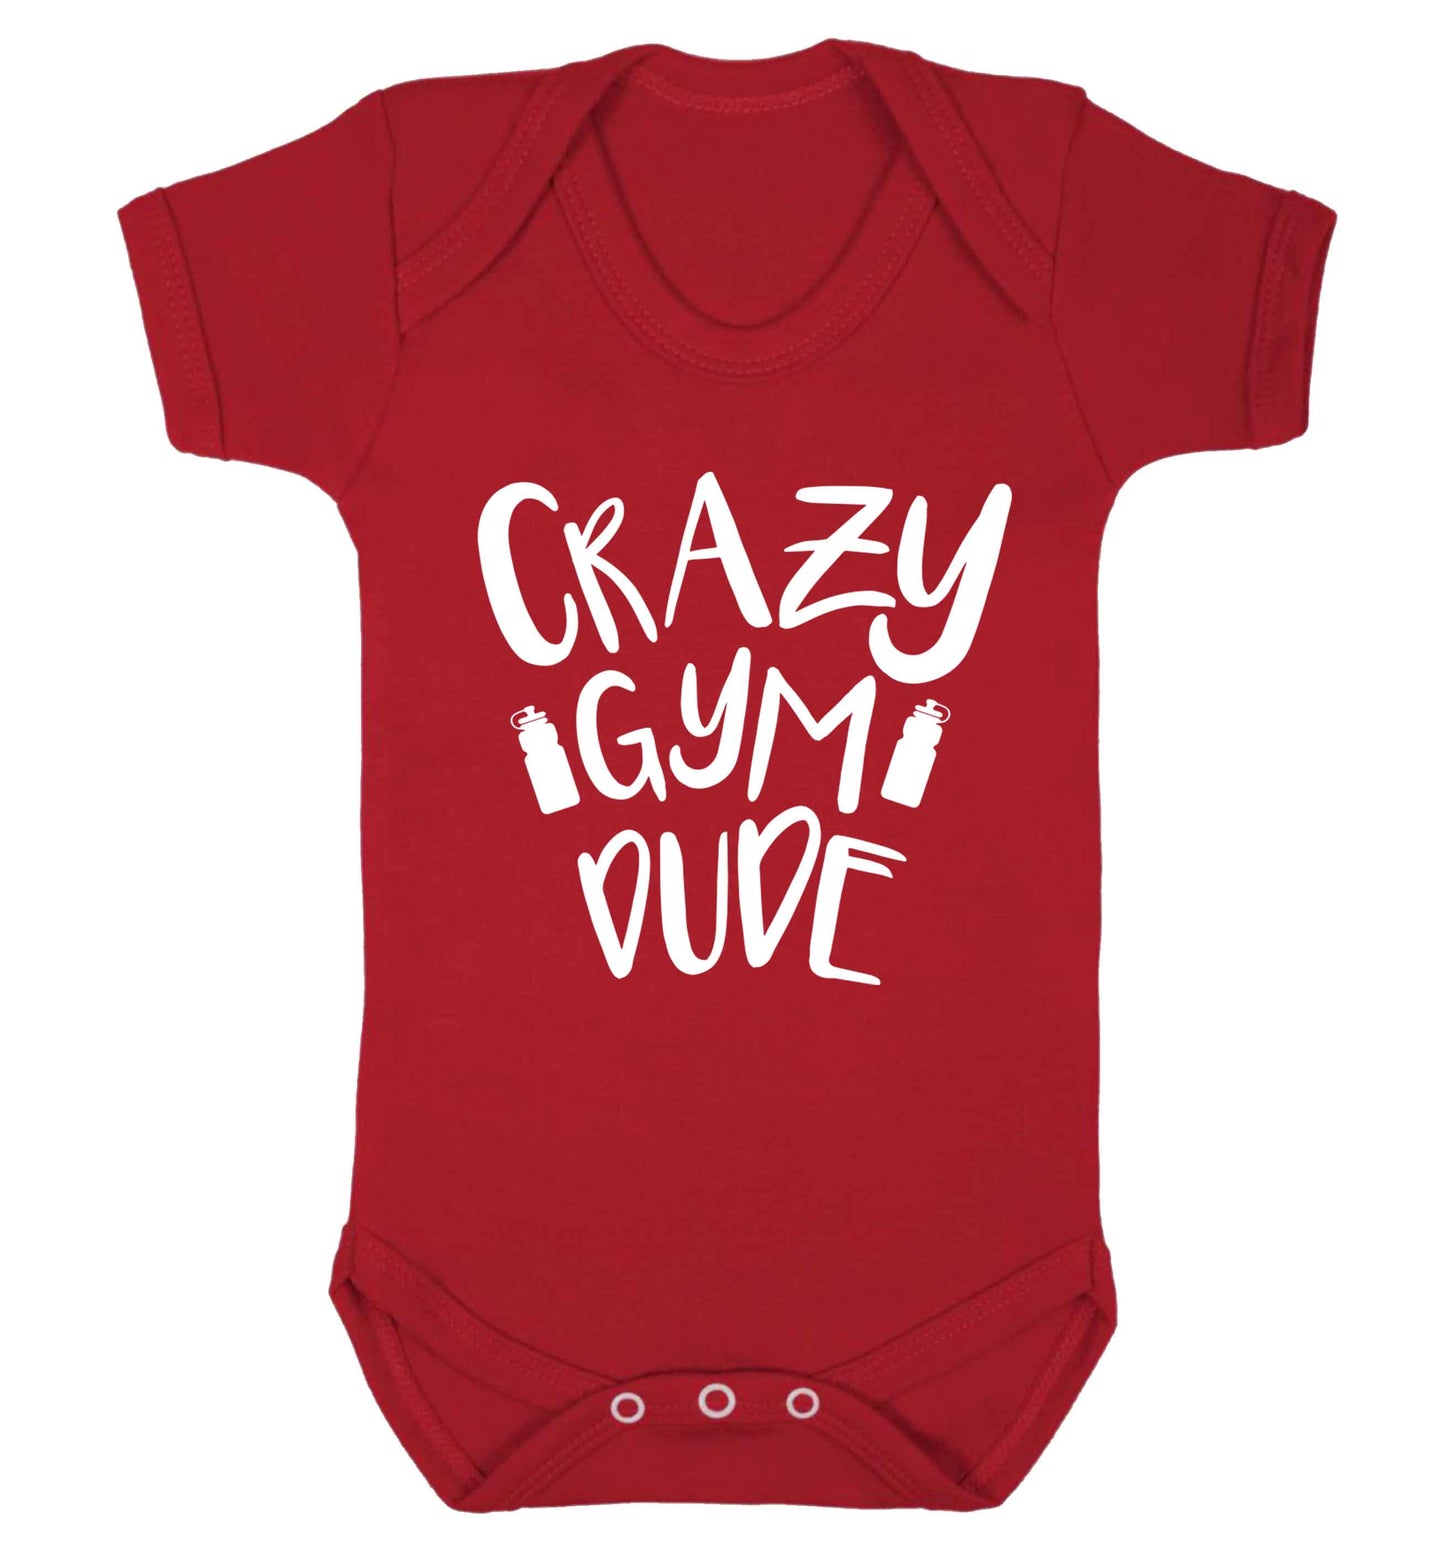 Crazy gym dude Baby Vest red 18-24 months